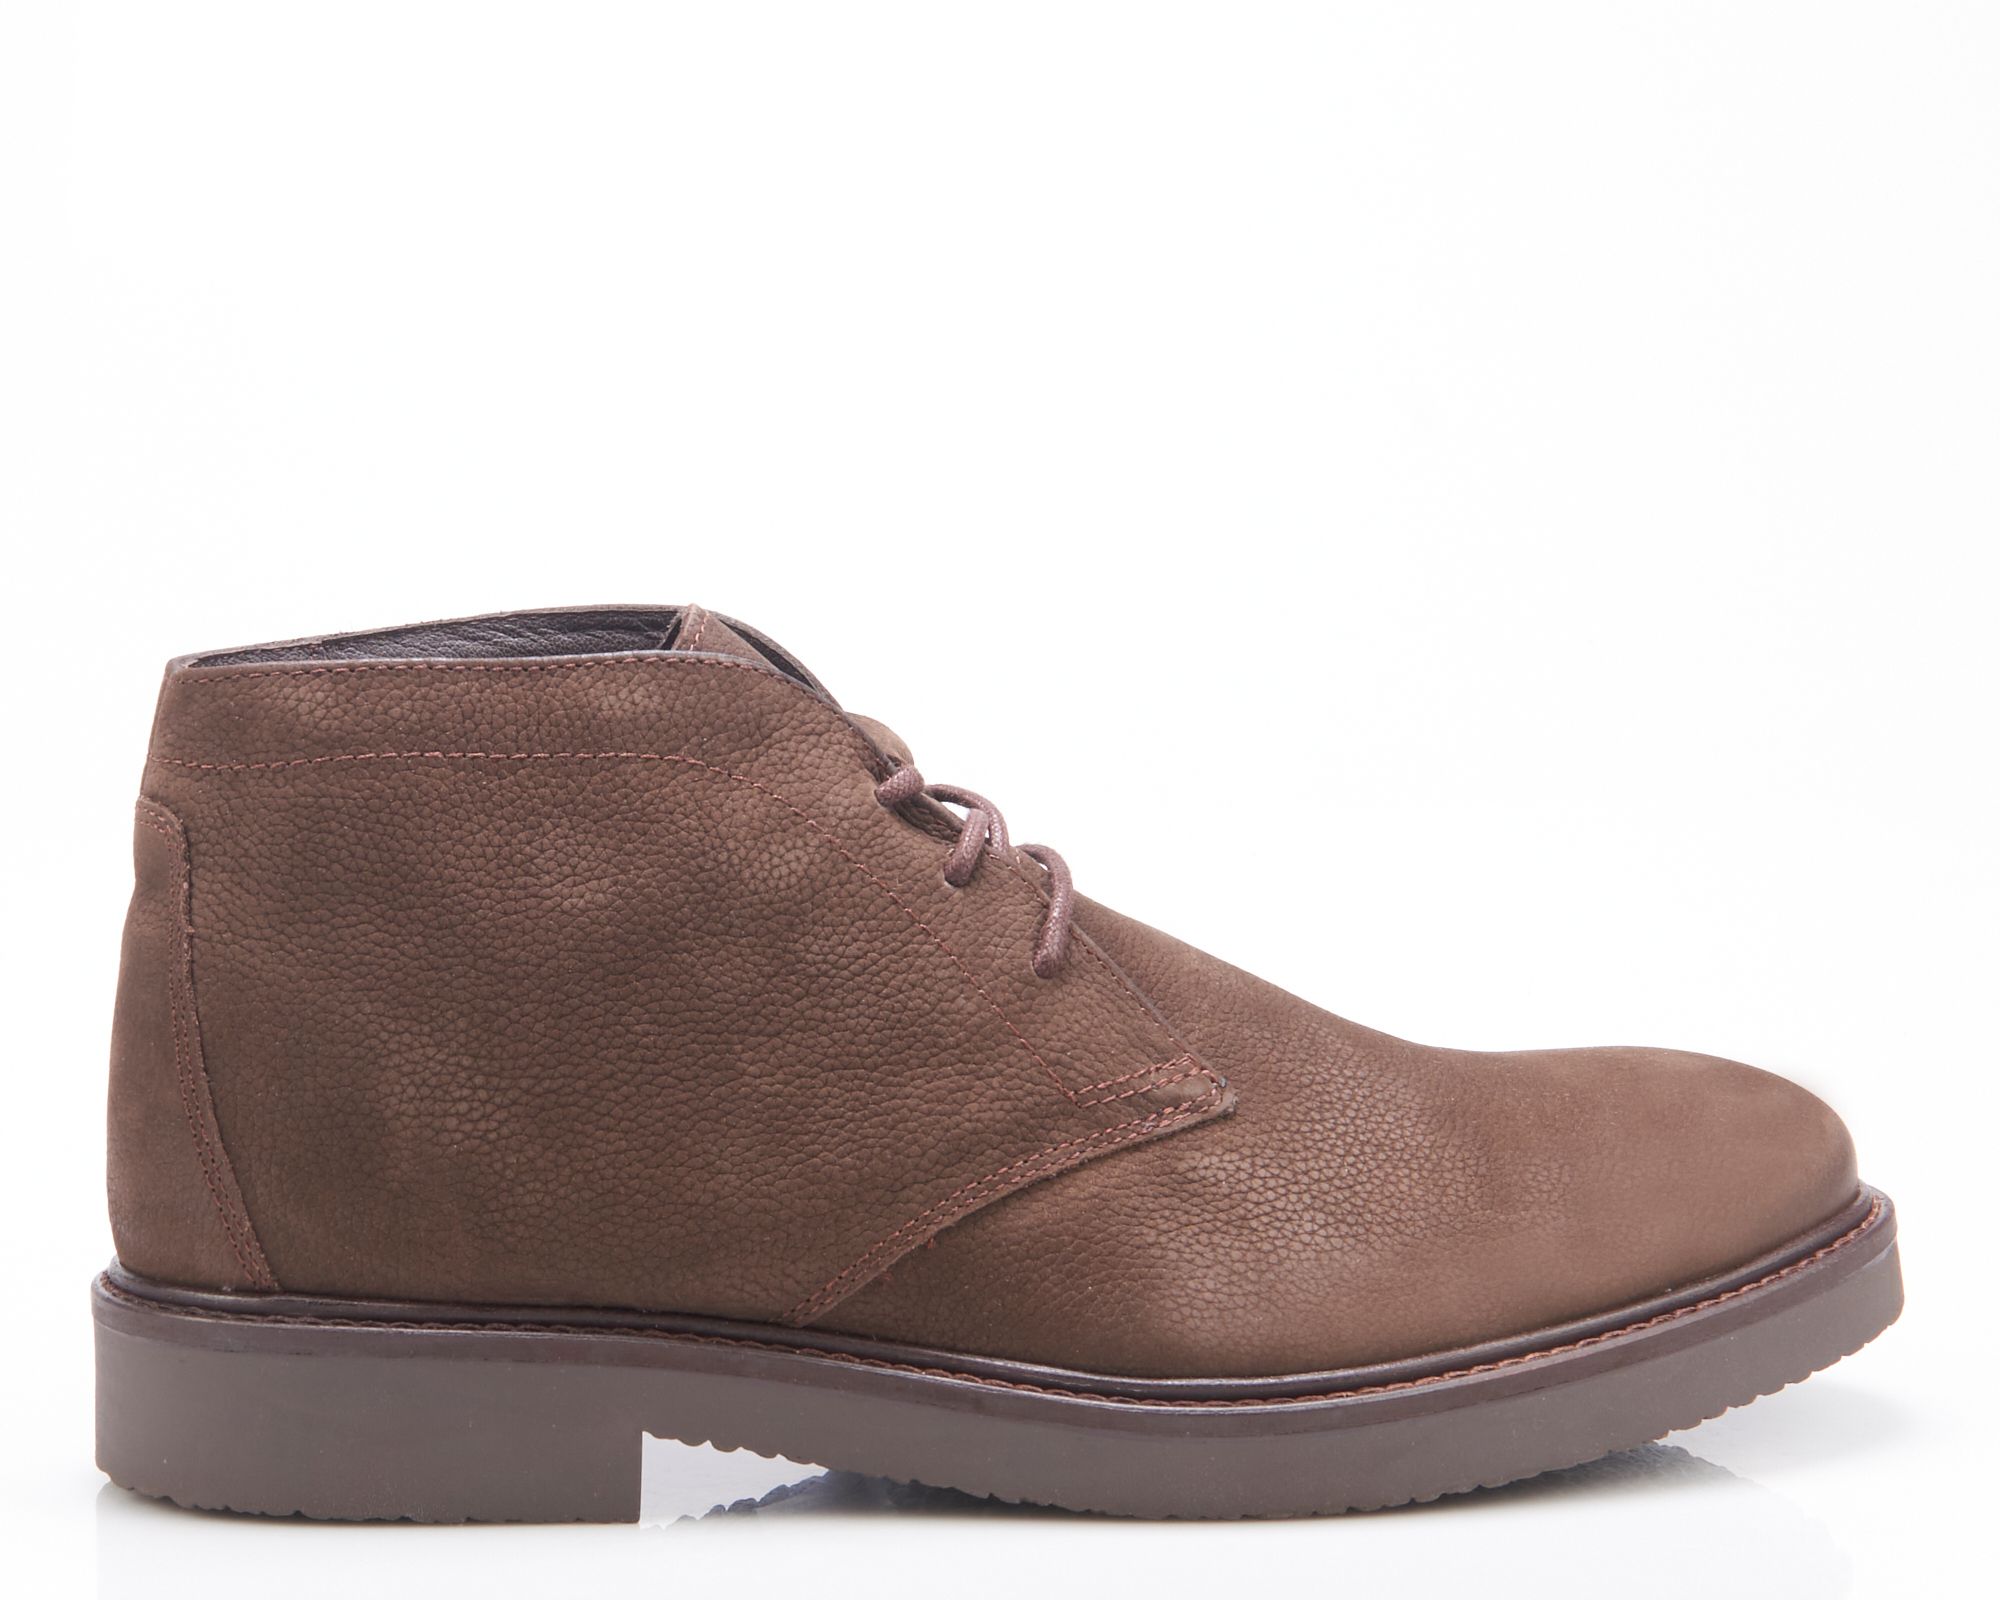 Campbell Classic Casual schoenen Donkerbruin uni 078834-001-40